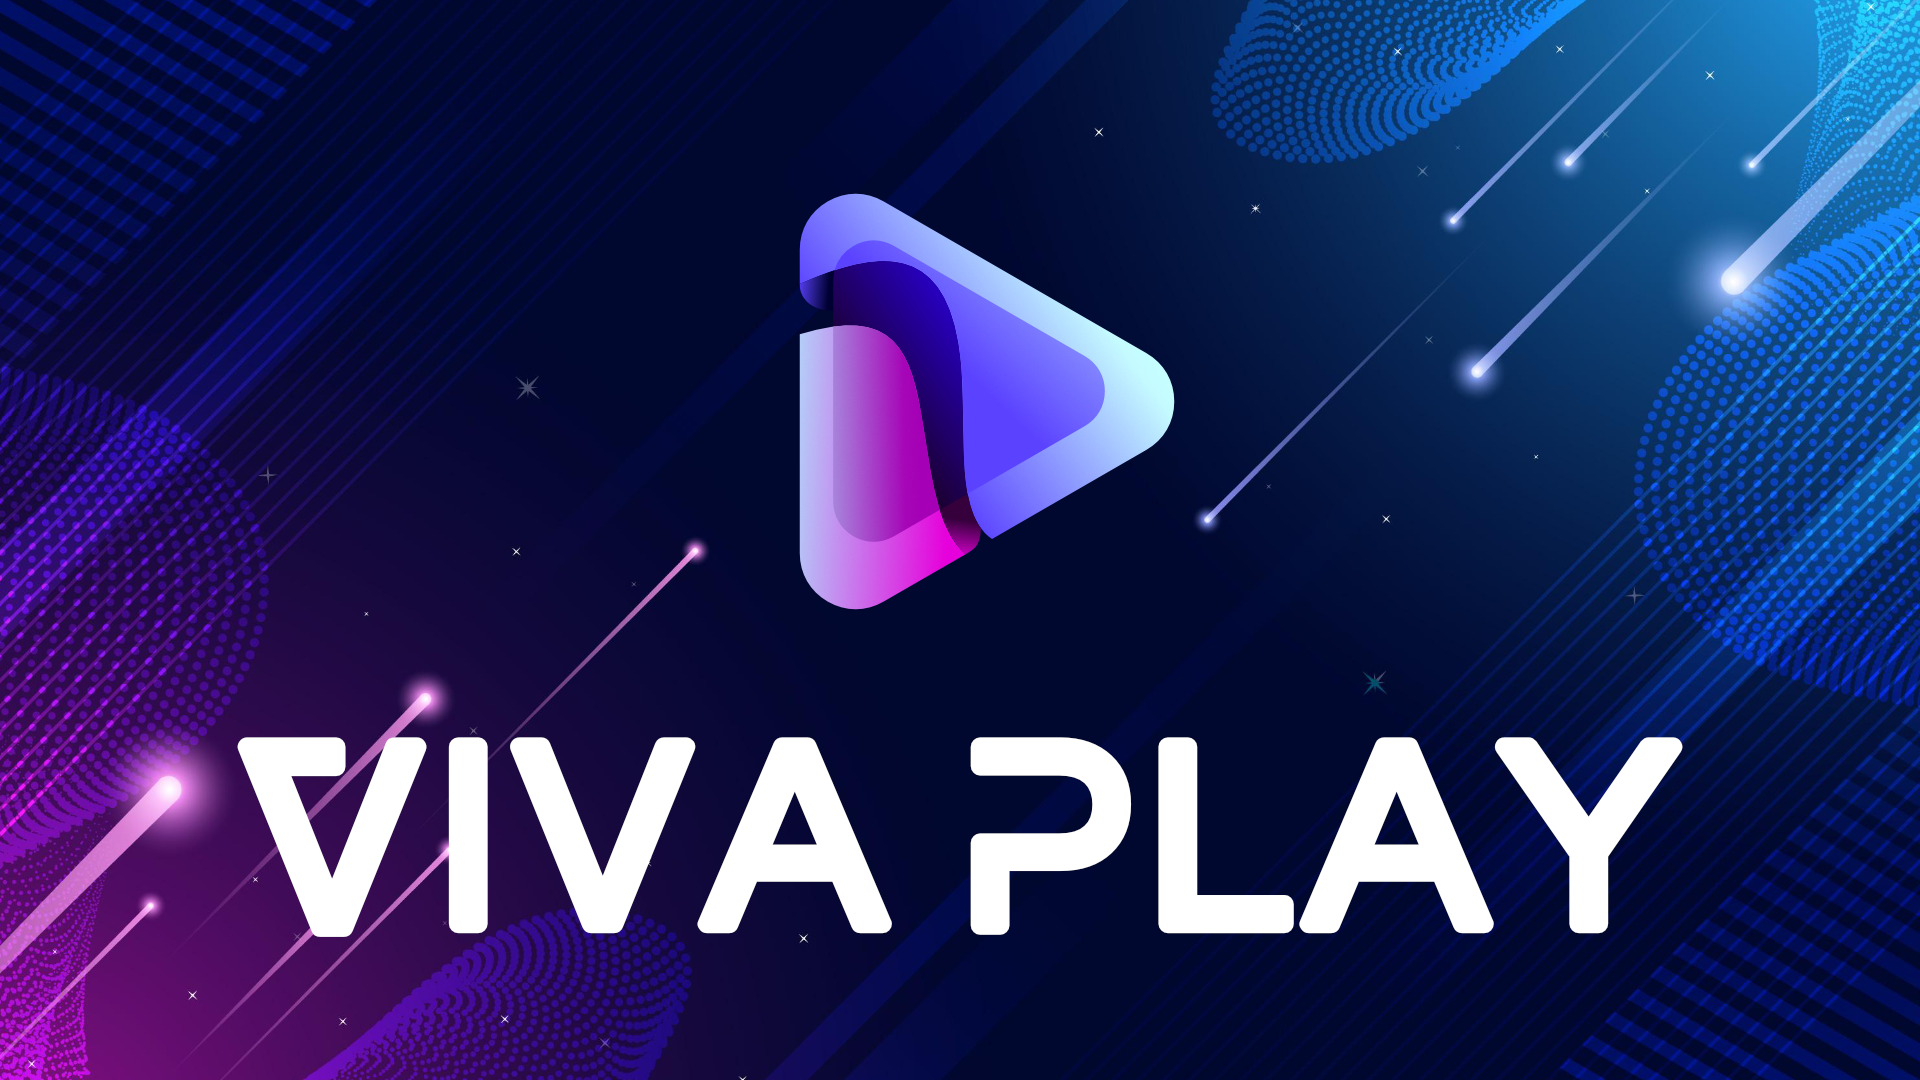 Viva Play Community is launching!